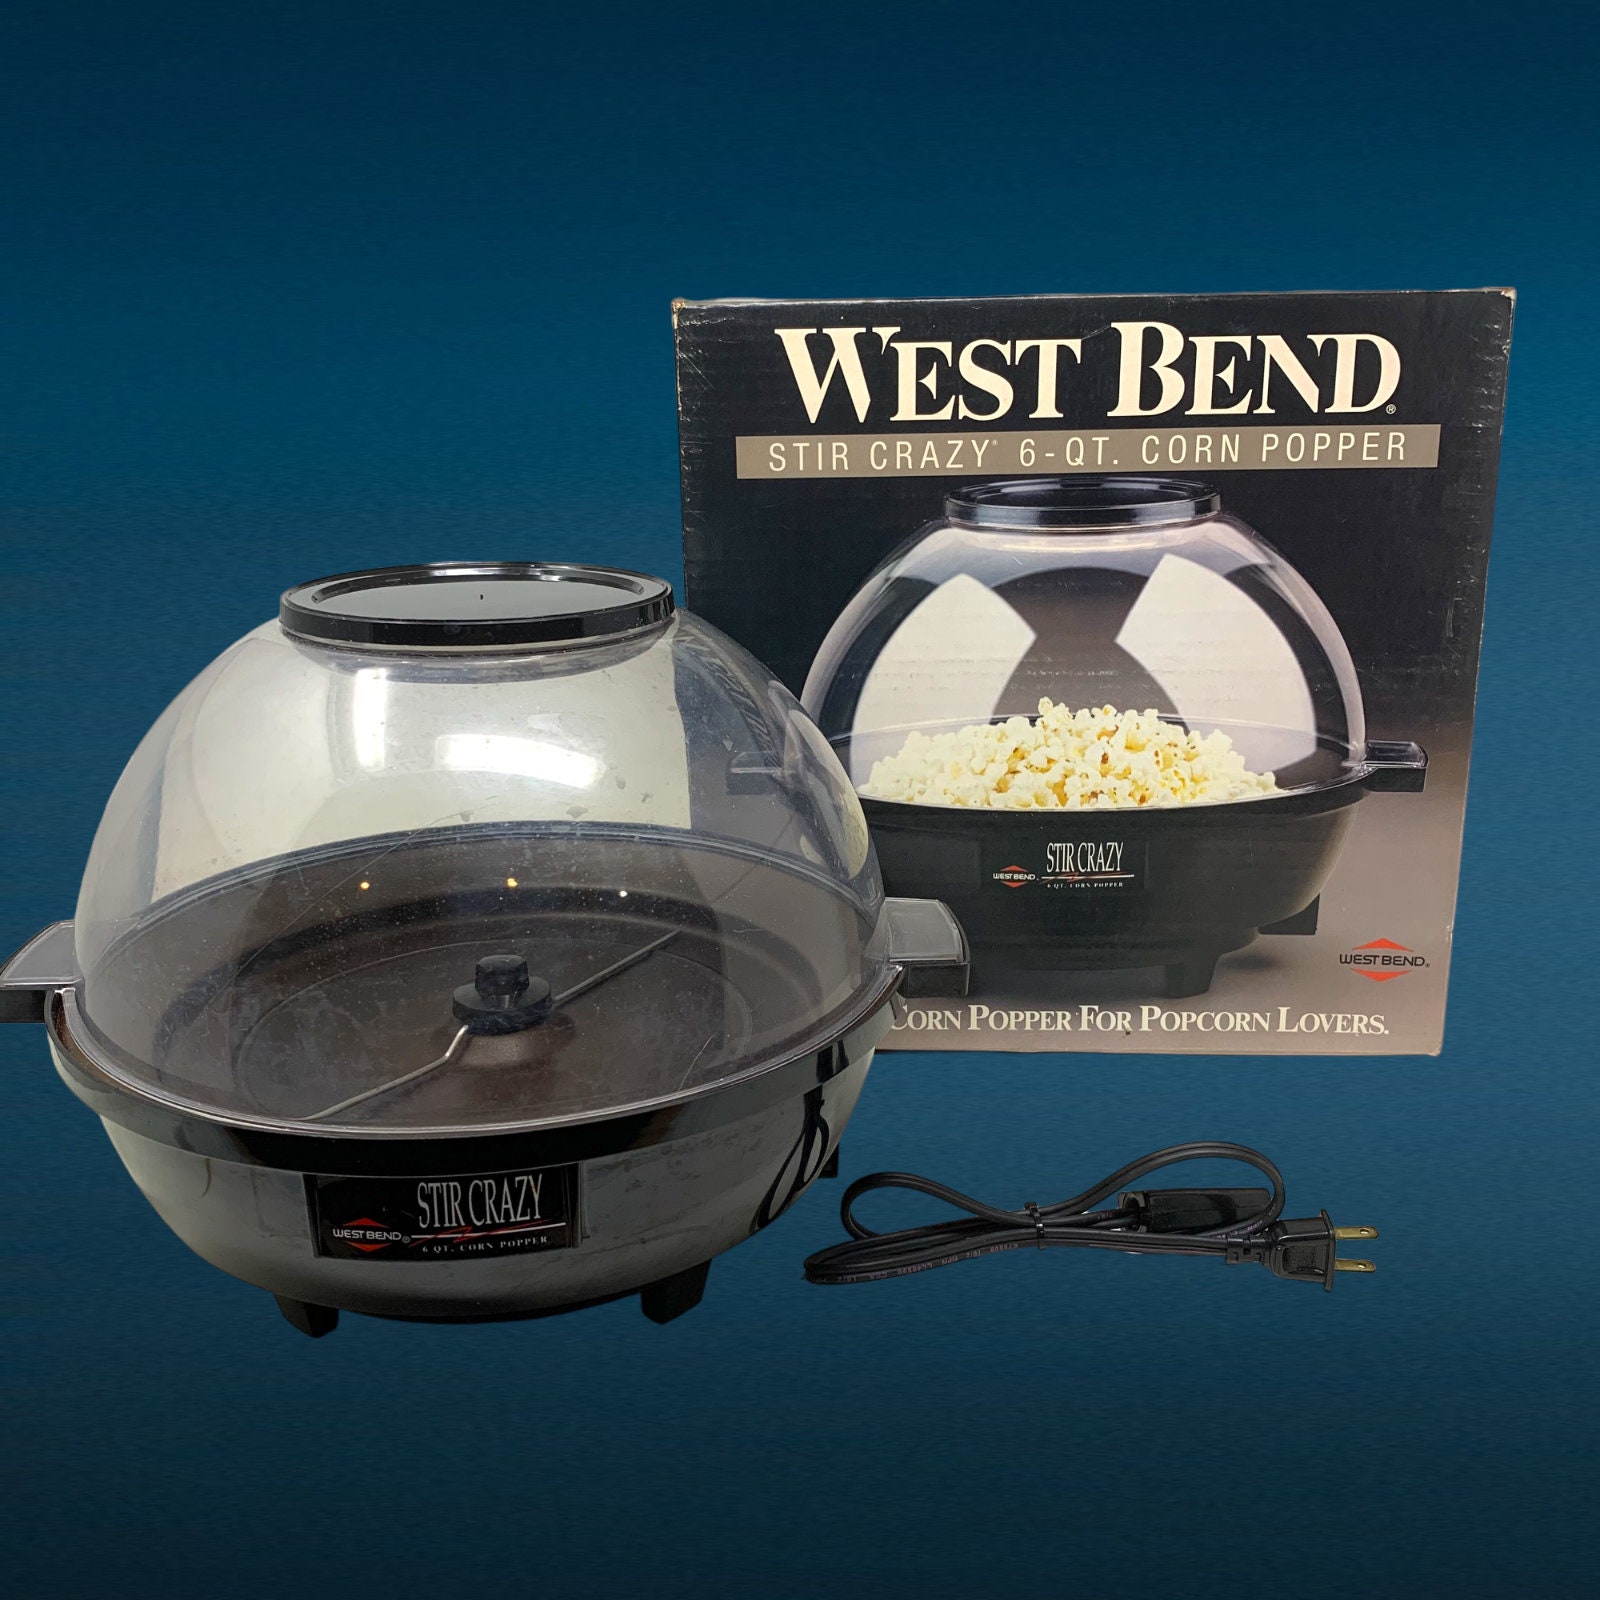 West Bend 82707B Stir Crazy Electric Hot Oil Popcorn Popper